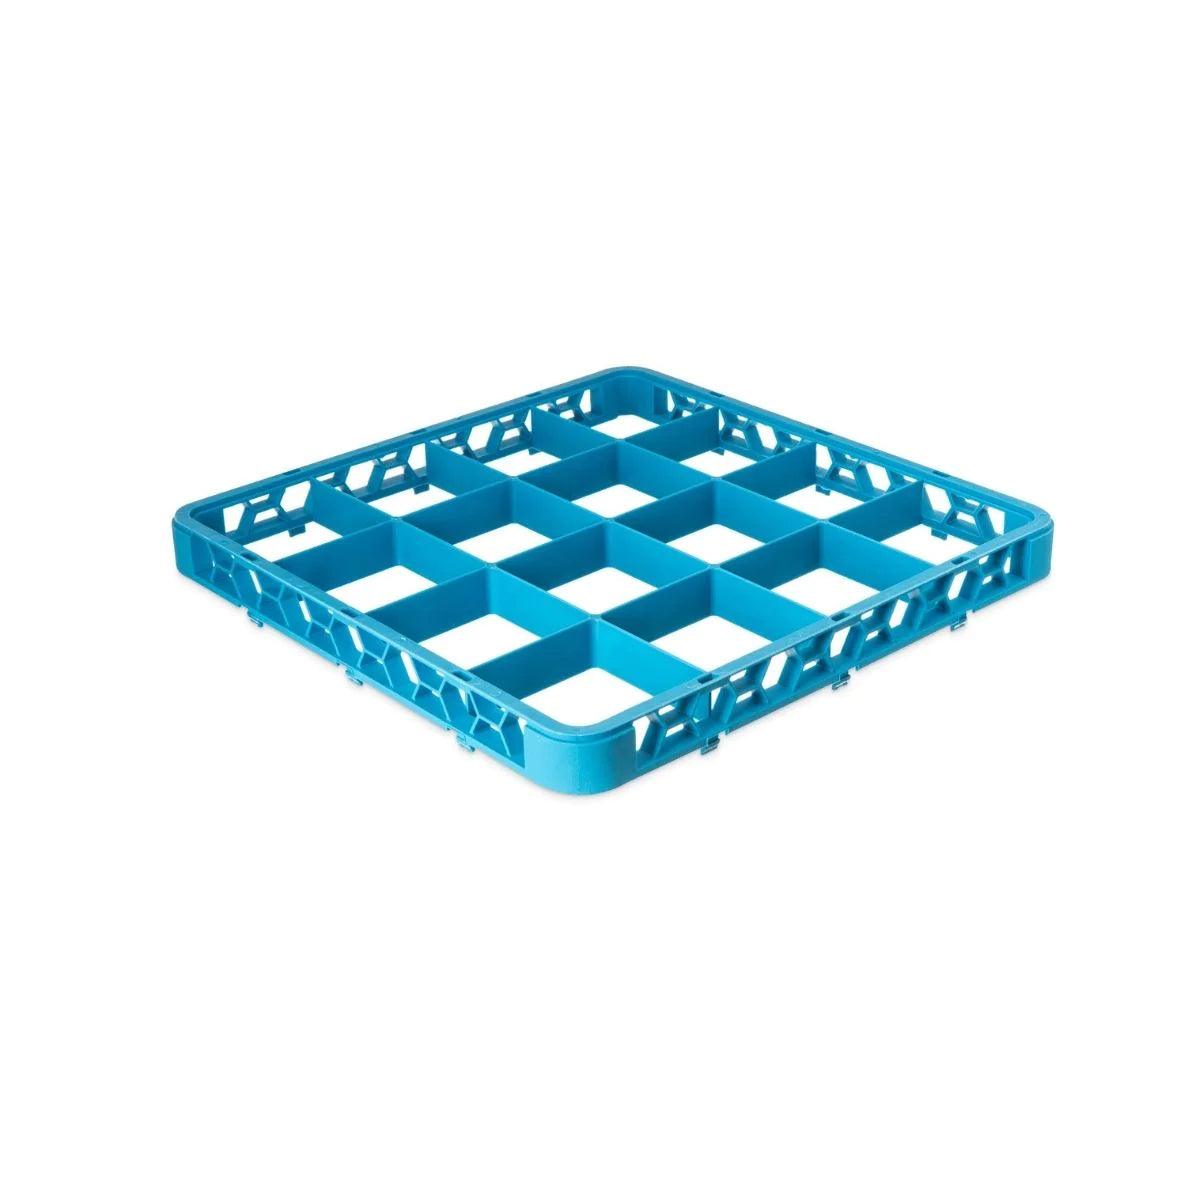 Jiwins Plastic 16-Compartment Standard Extender Rack Blue 19.7 x 19.7 x 1.8"